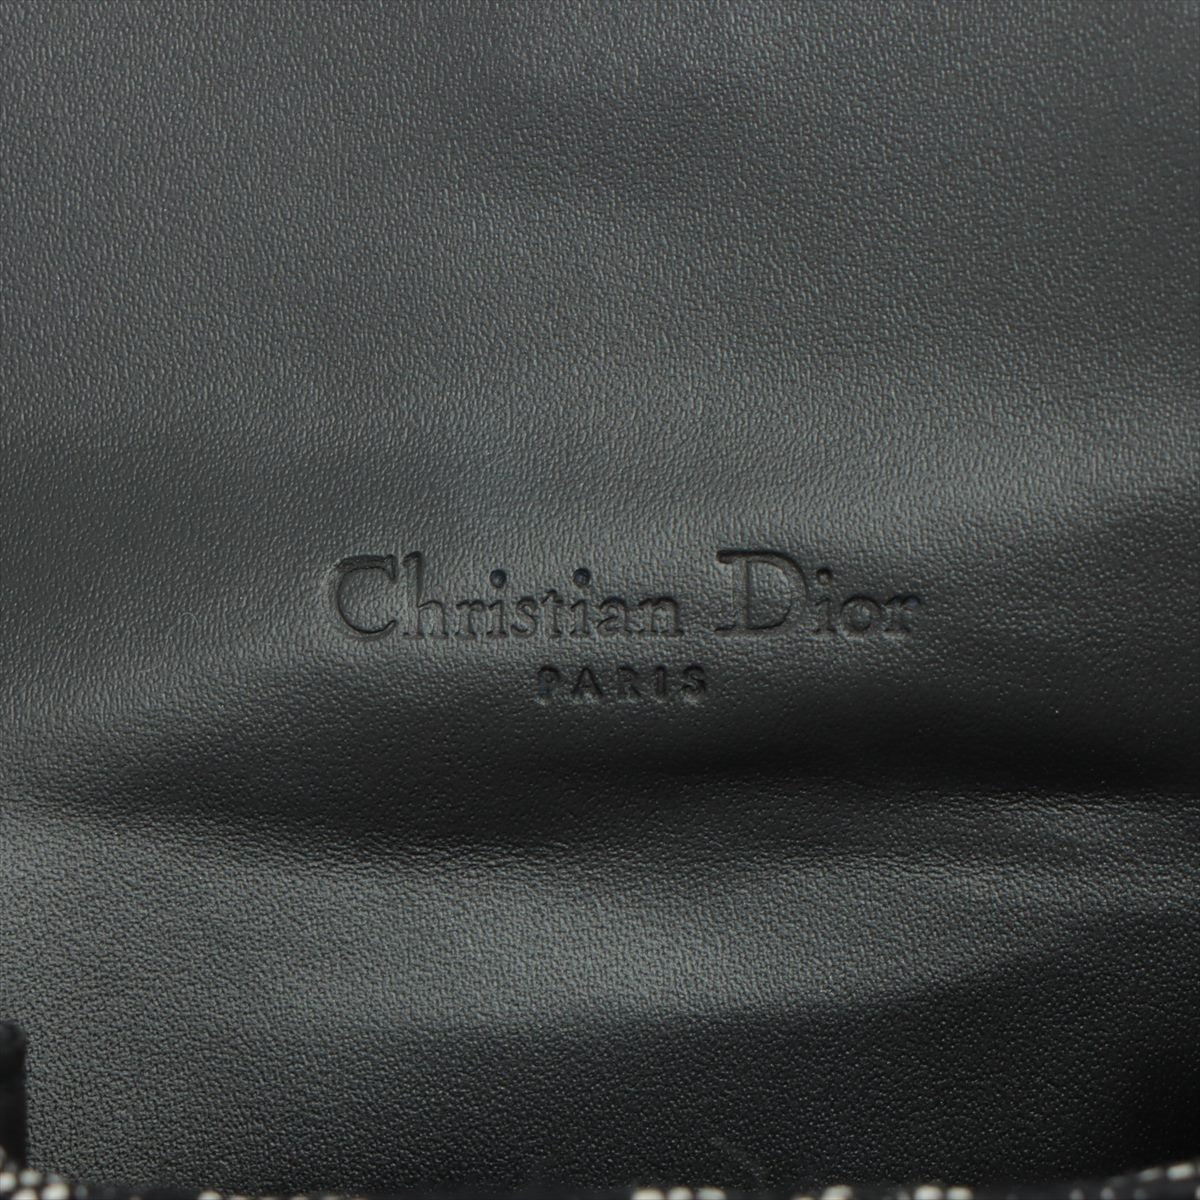 Christian Dior Trotter Saddle Canvas & leather Waist bag Navy blue